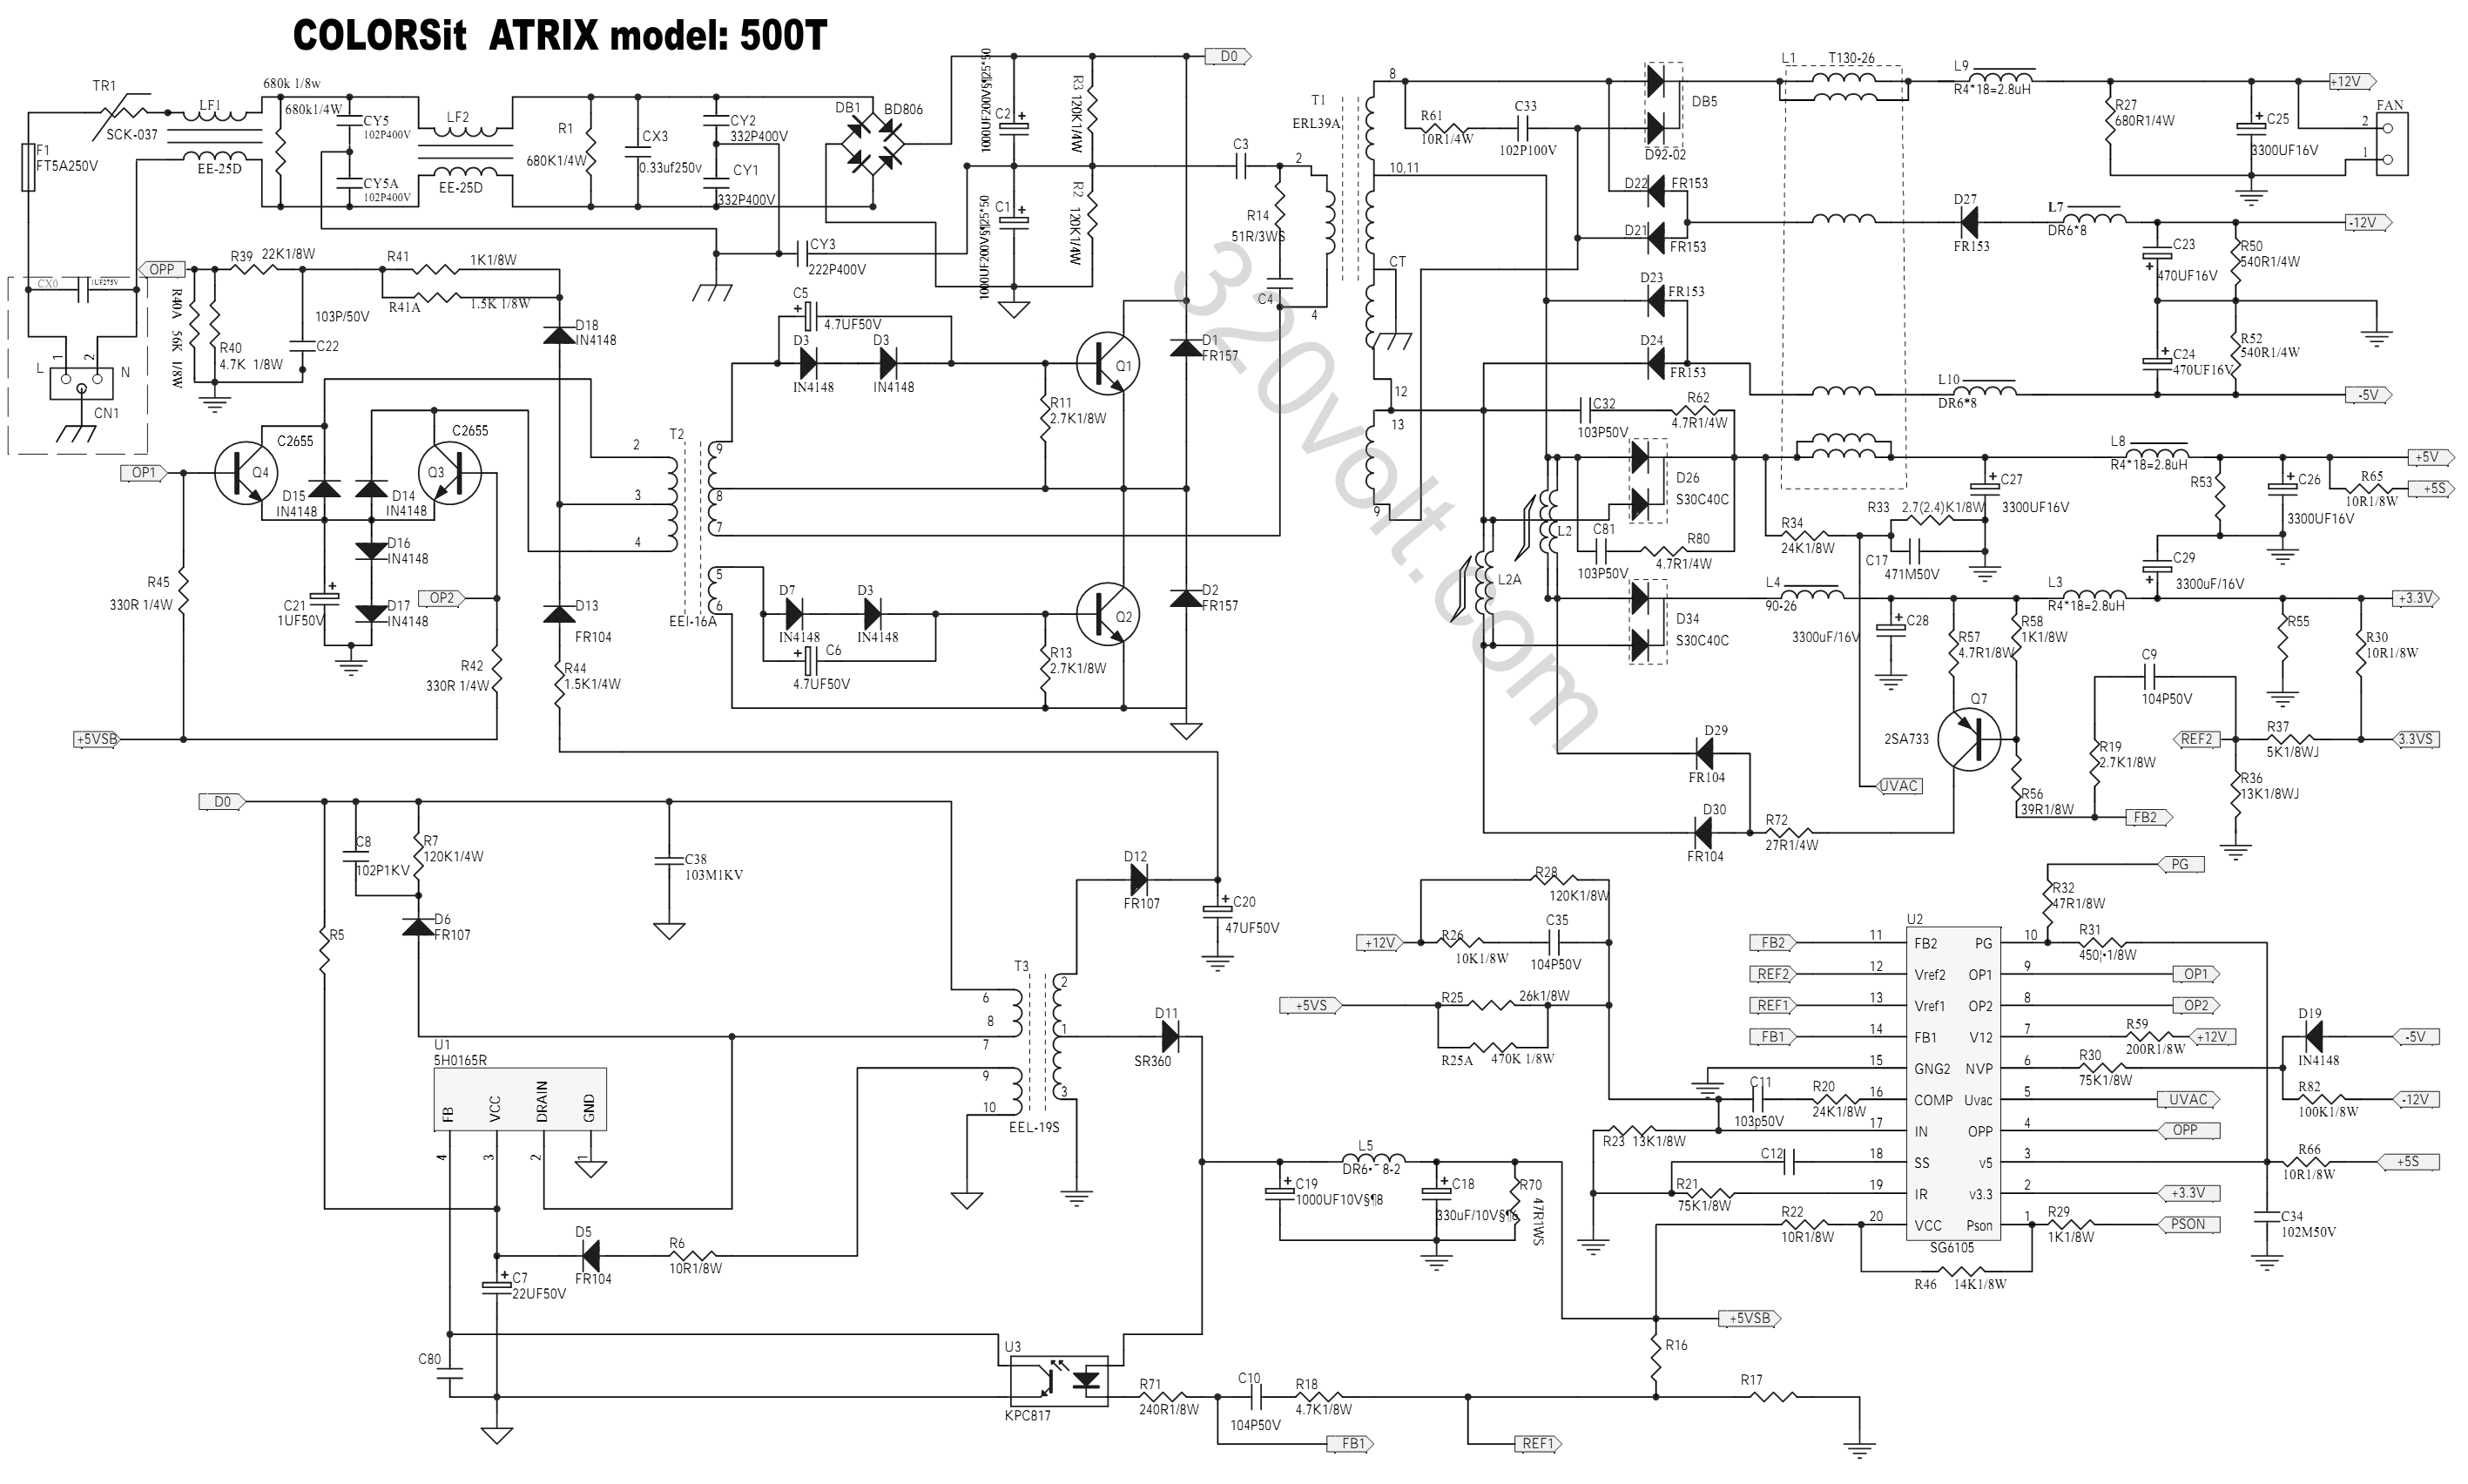 emc 2390 power supply wiring diagram